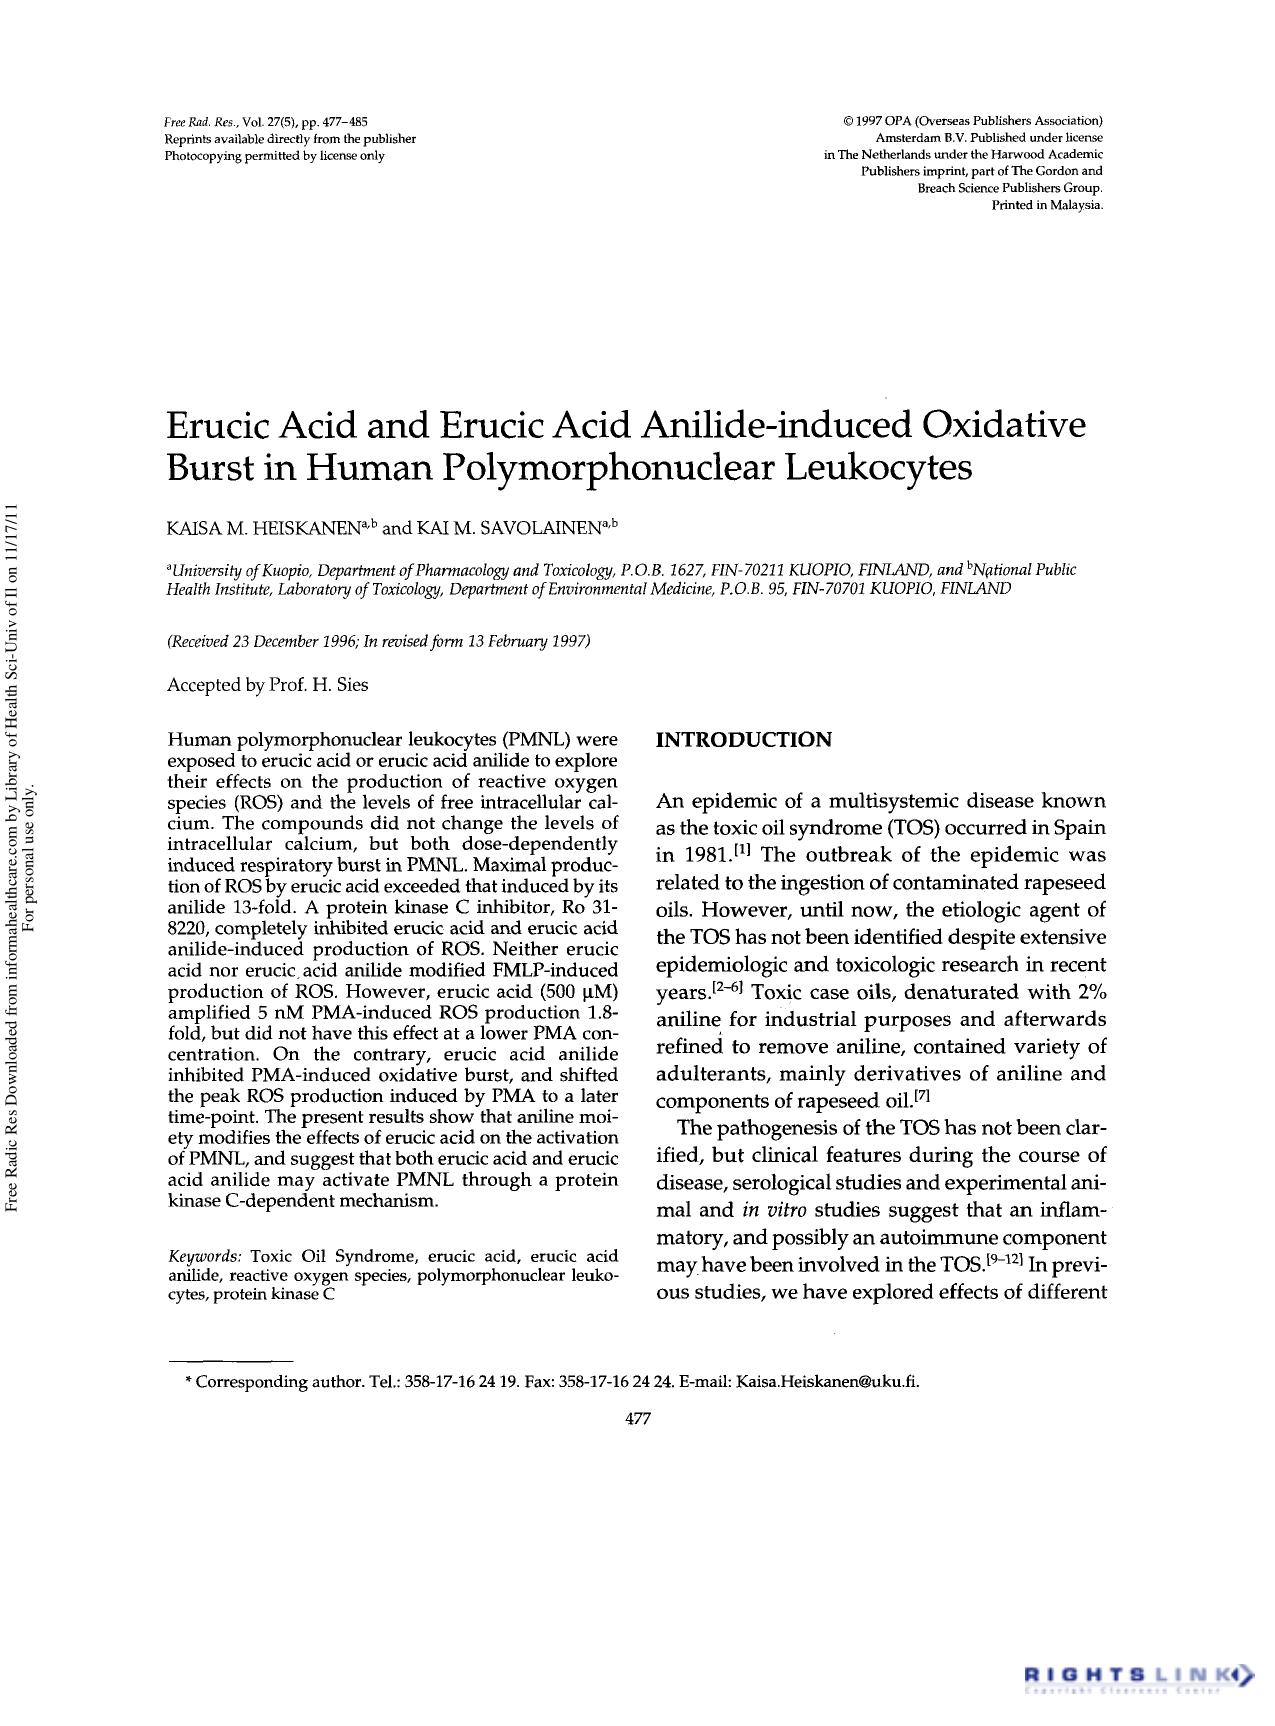 Erucic Acid and Erucic Acid Anilide-induced Oxidative Burst in Human Polymorphonuclear Leukocytes by Kaisa M. Heiskanen1 2 & Kai M. Savolainen1 2